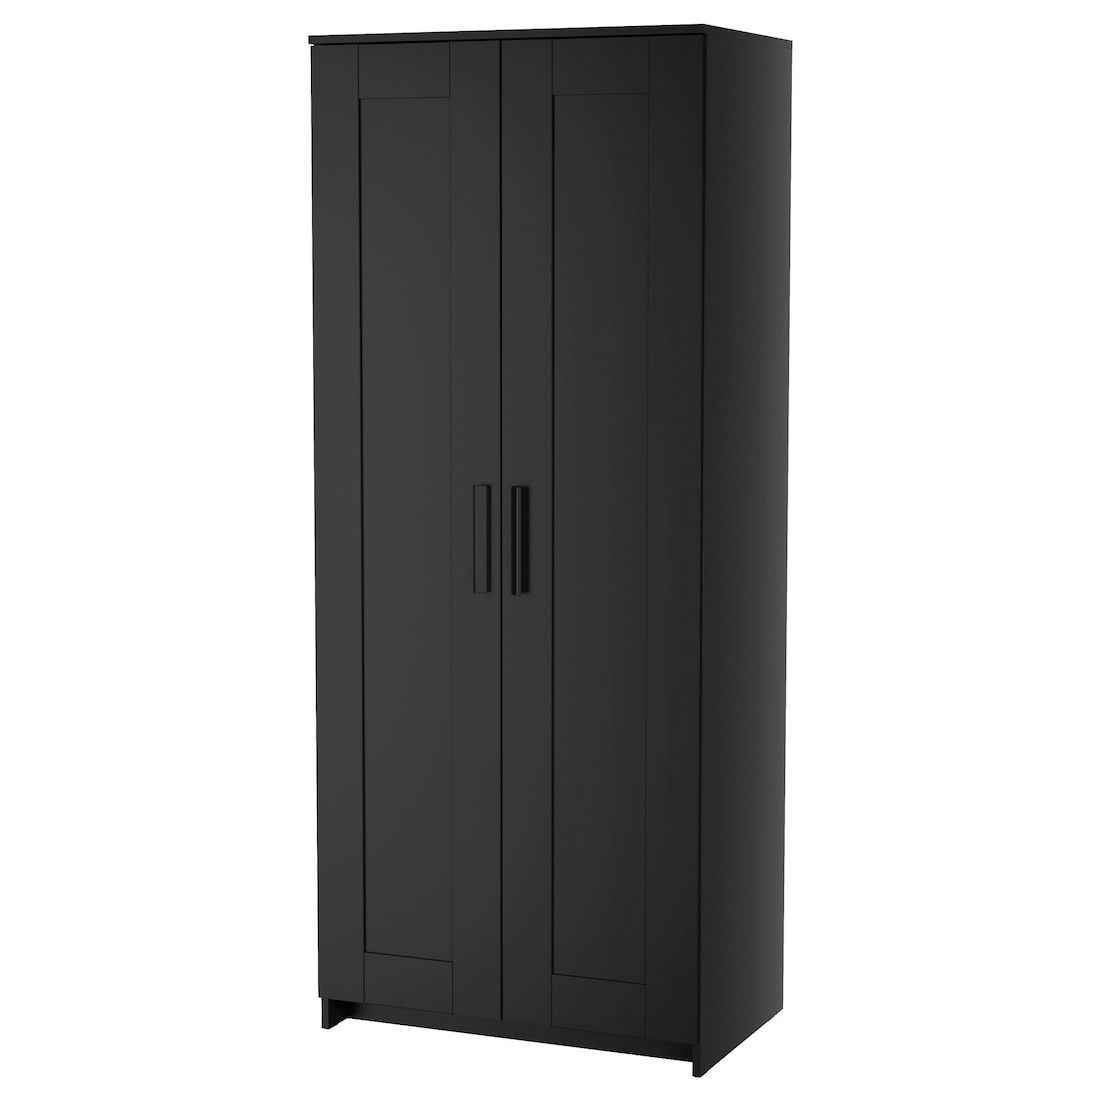 IKEA BRIMNES wardrobe 2 door black